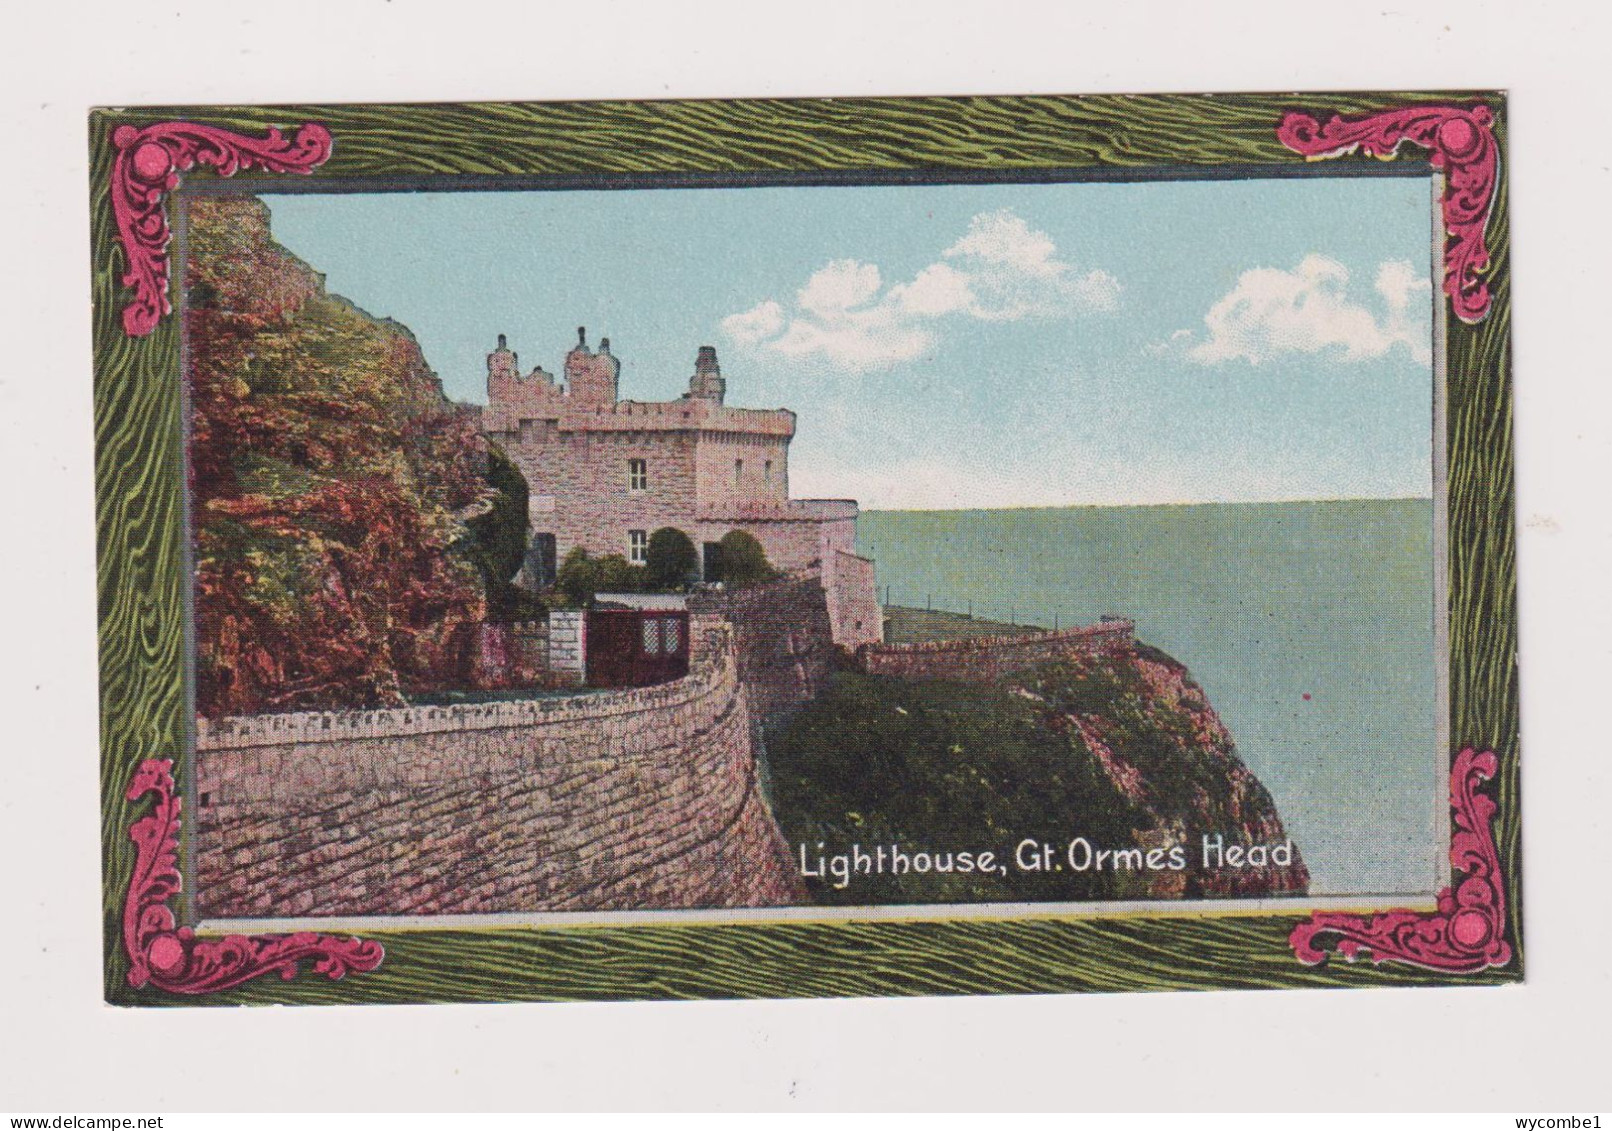 WALES - Great Ormes Head The Lighthouse Unused Vintage Postcard - Caernarvonshire